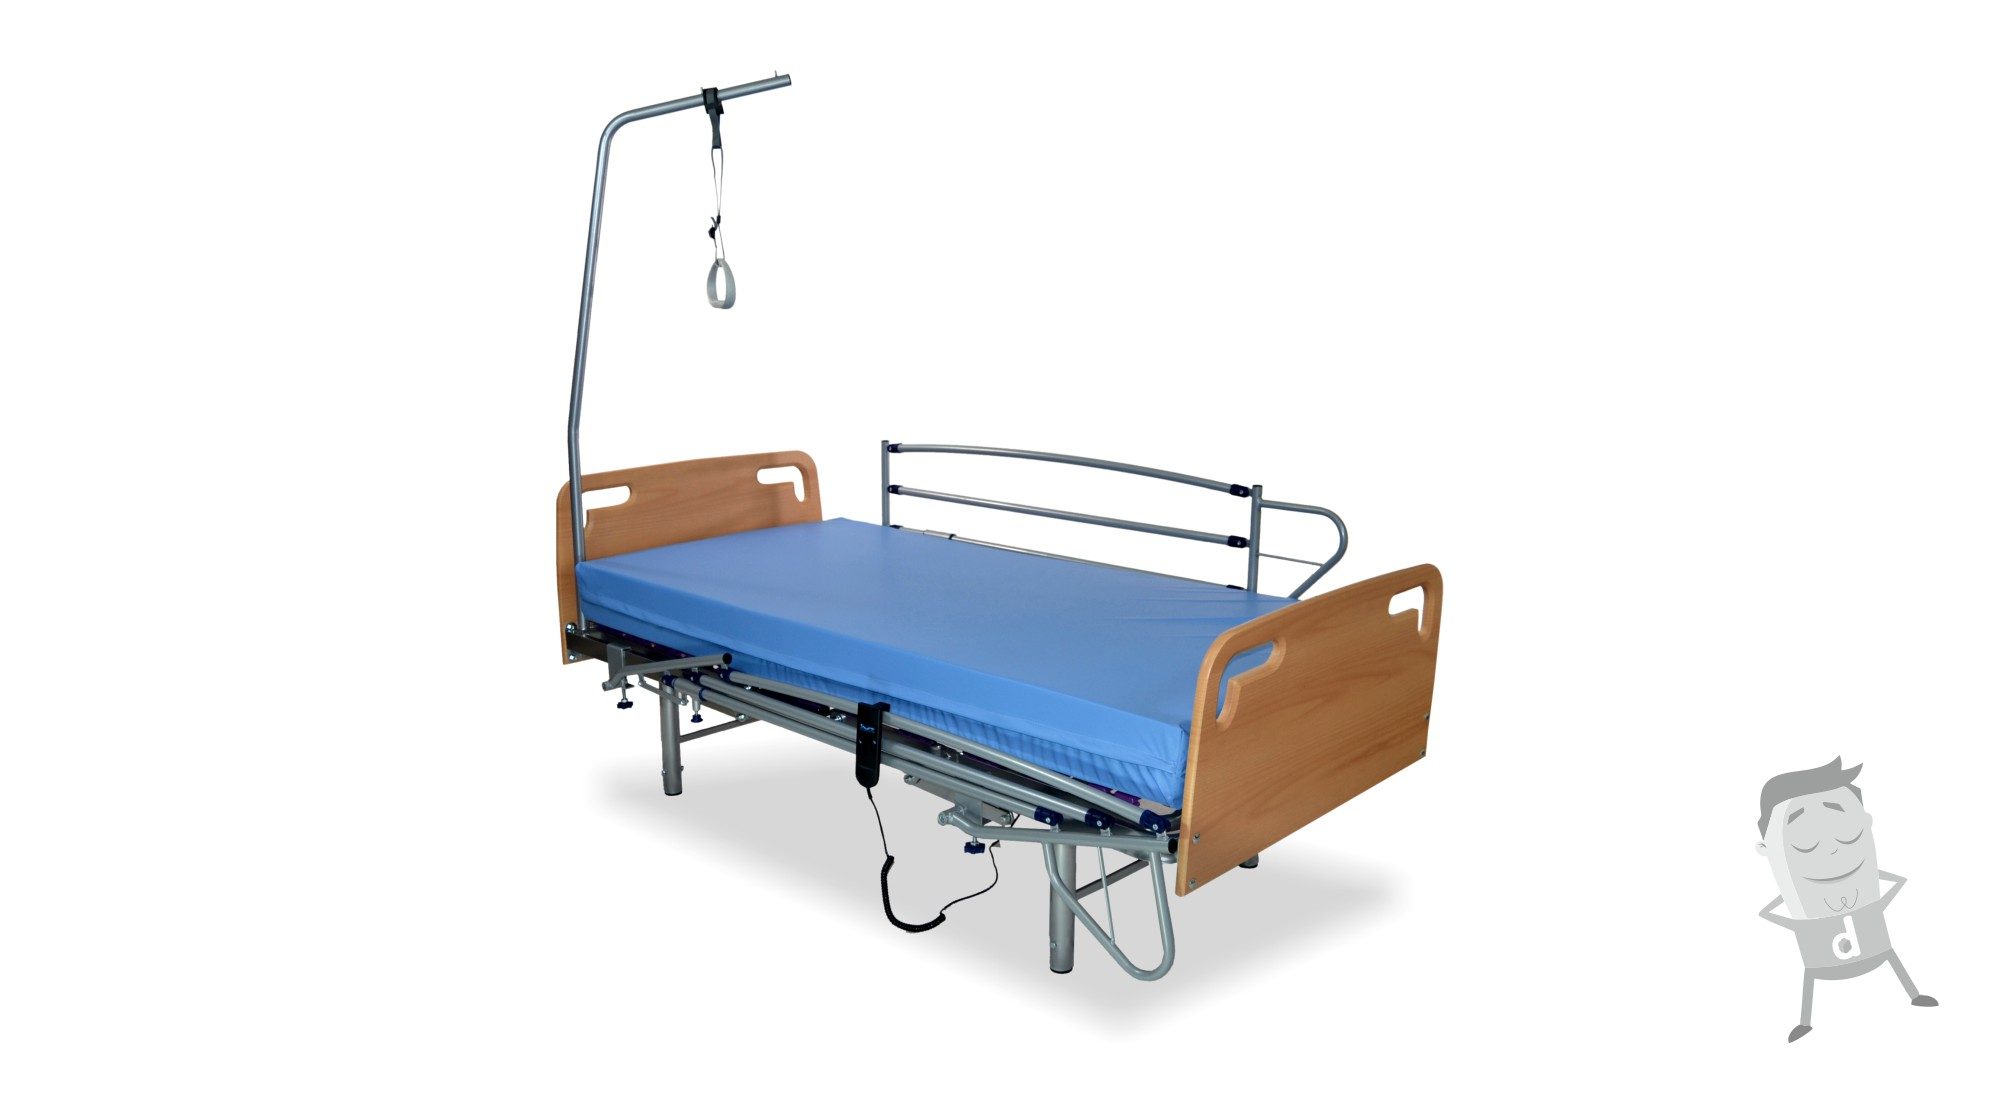 cama-hospitalaria-ortopedica-sanitaria-motorizada-para-enfermos-articulada-patas-elevable-regulables-cama-completa-posicion-recta